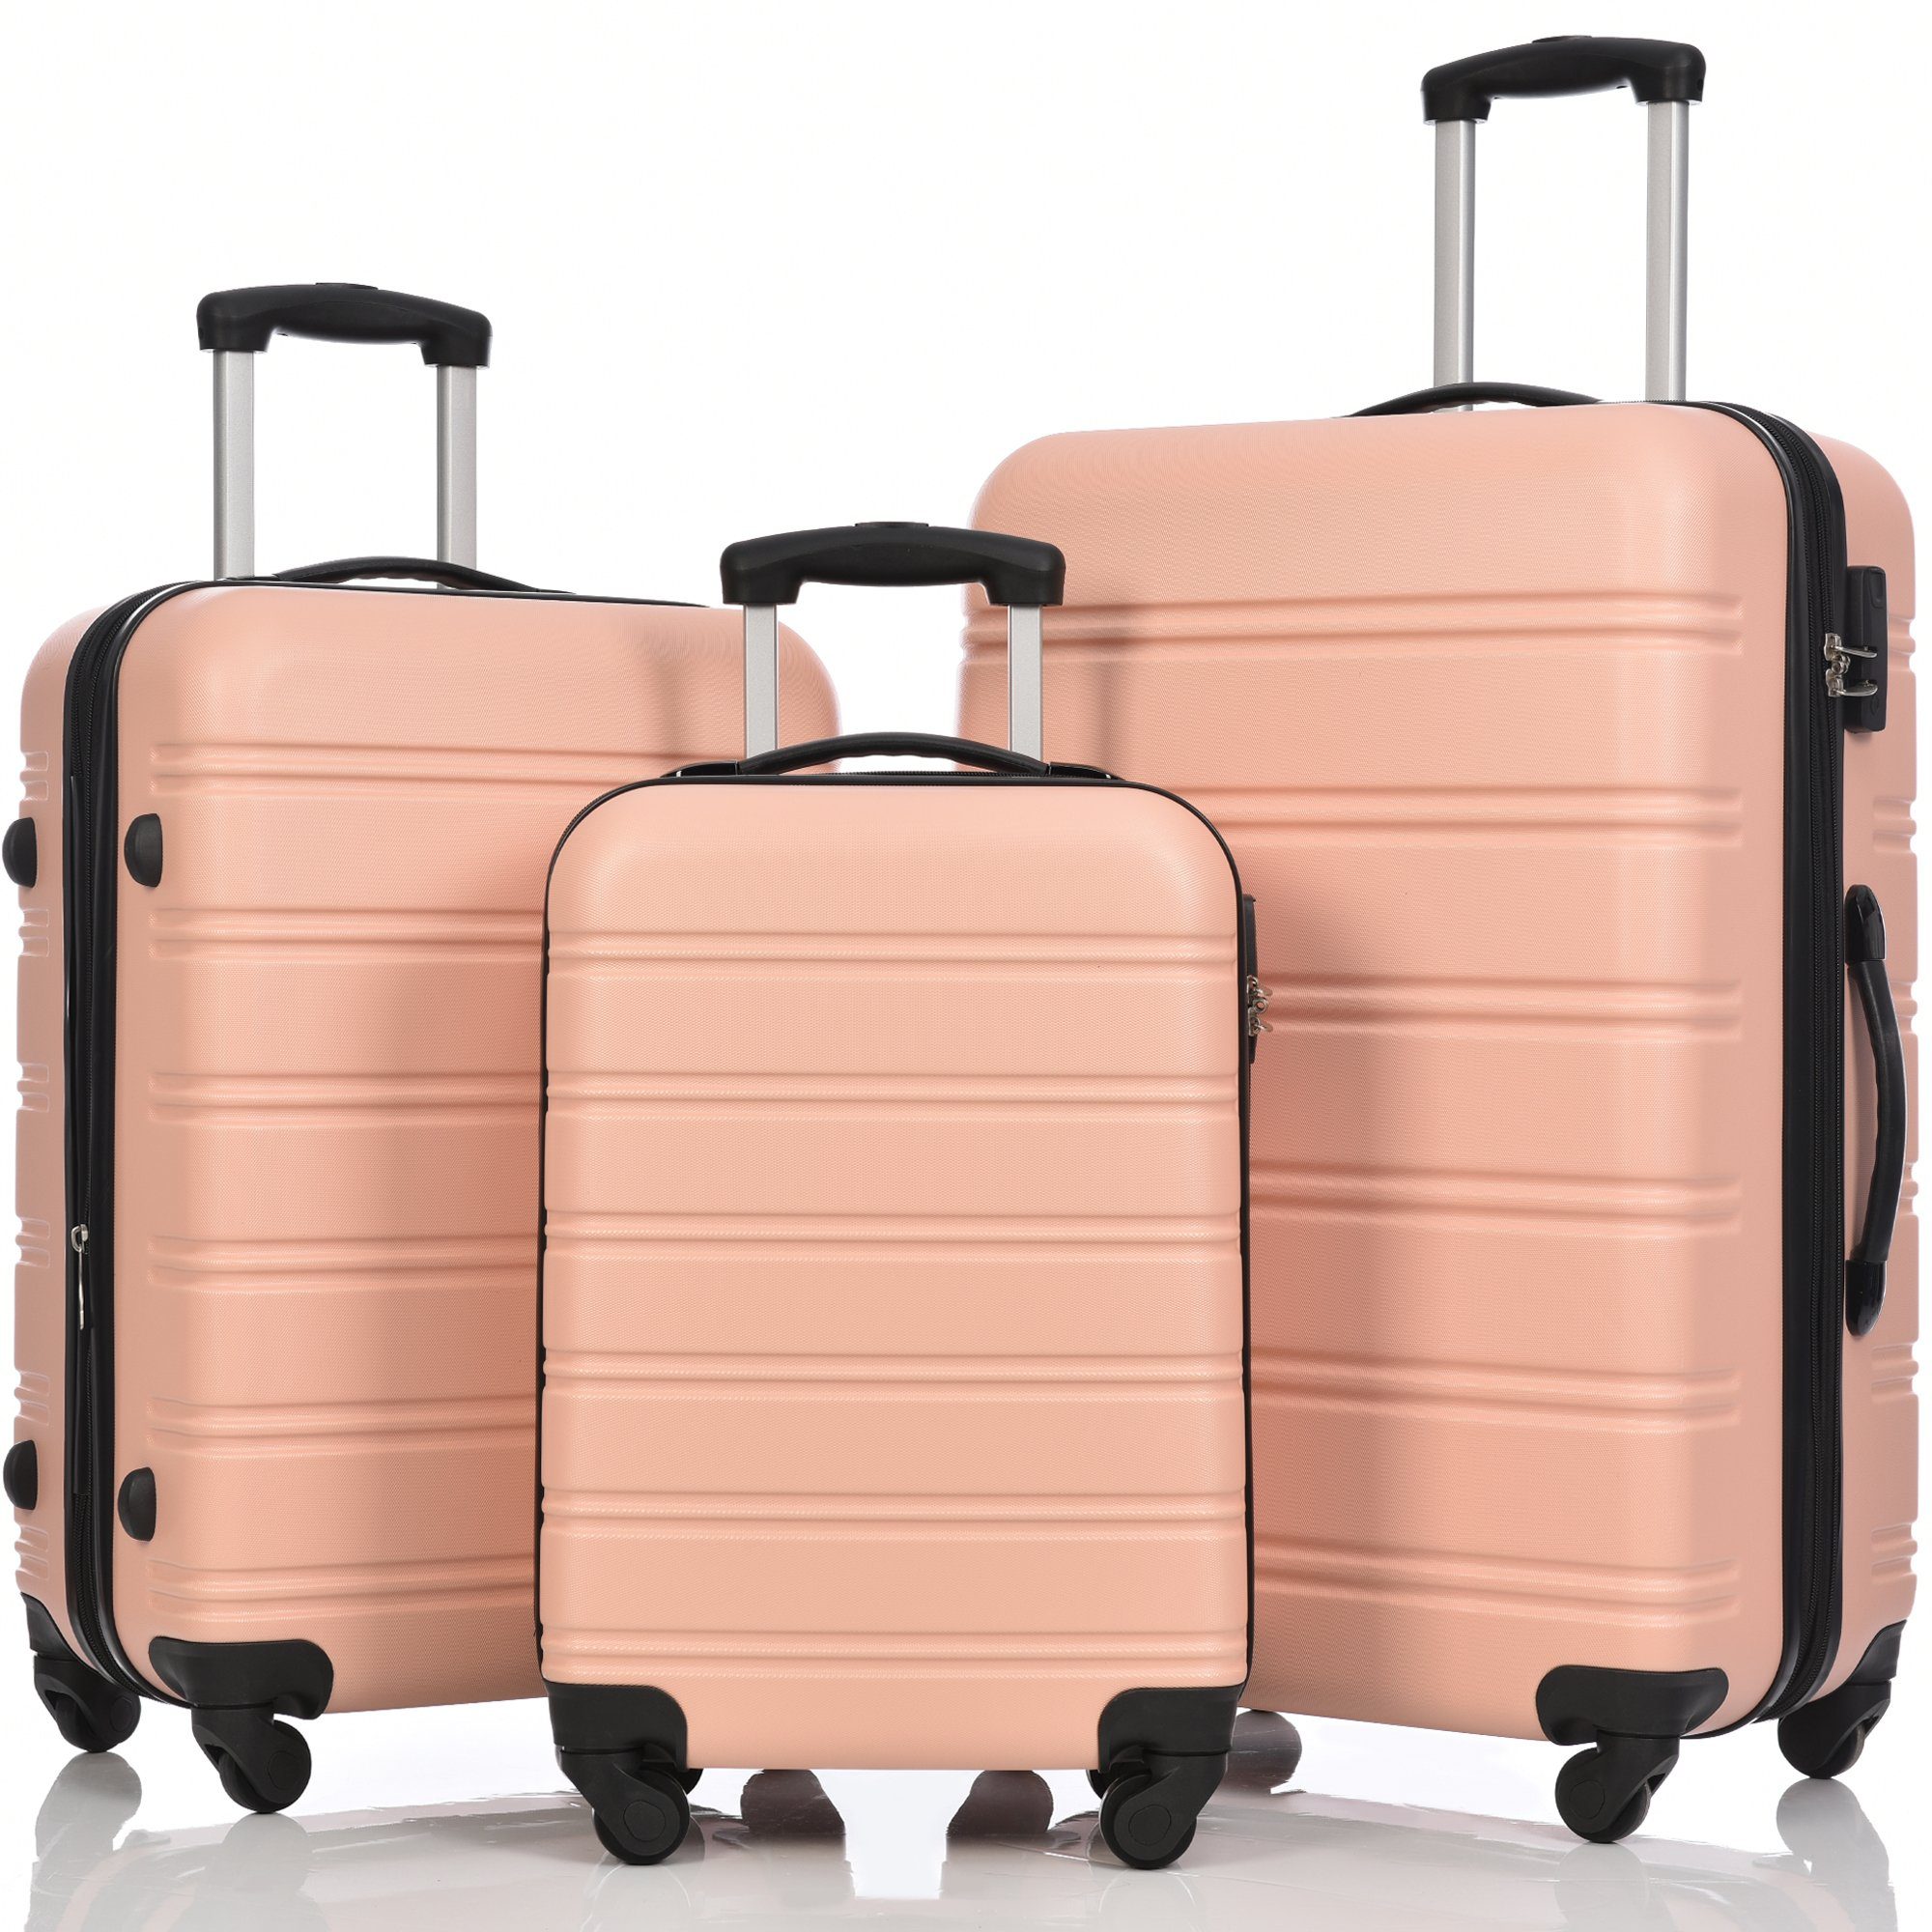 ABS-Material Trolley Handgepäck, OKWISH 3-tlg, Hartschalenkofferset 4 Hartschalen-Koffer, Rollen, Reisekoffer, Rollkoffer, Rosa